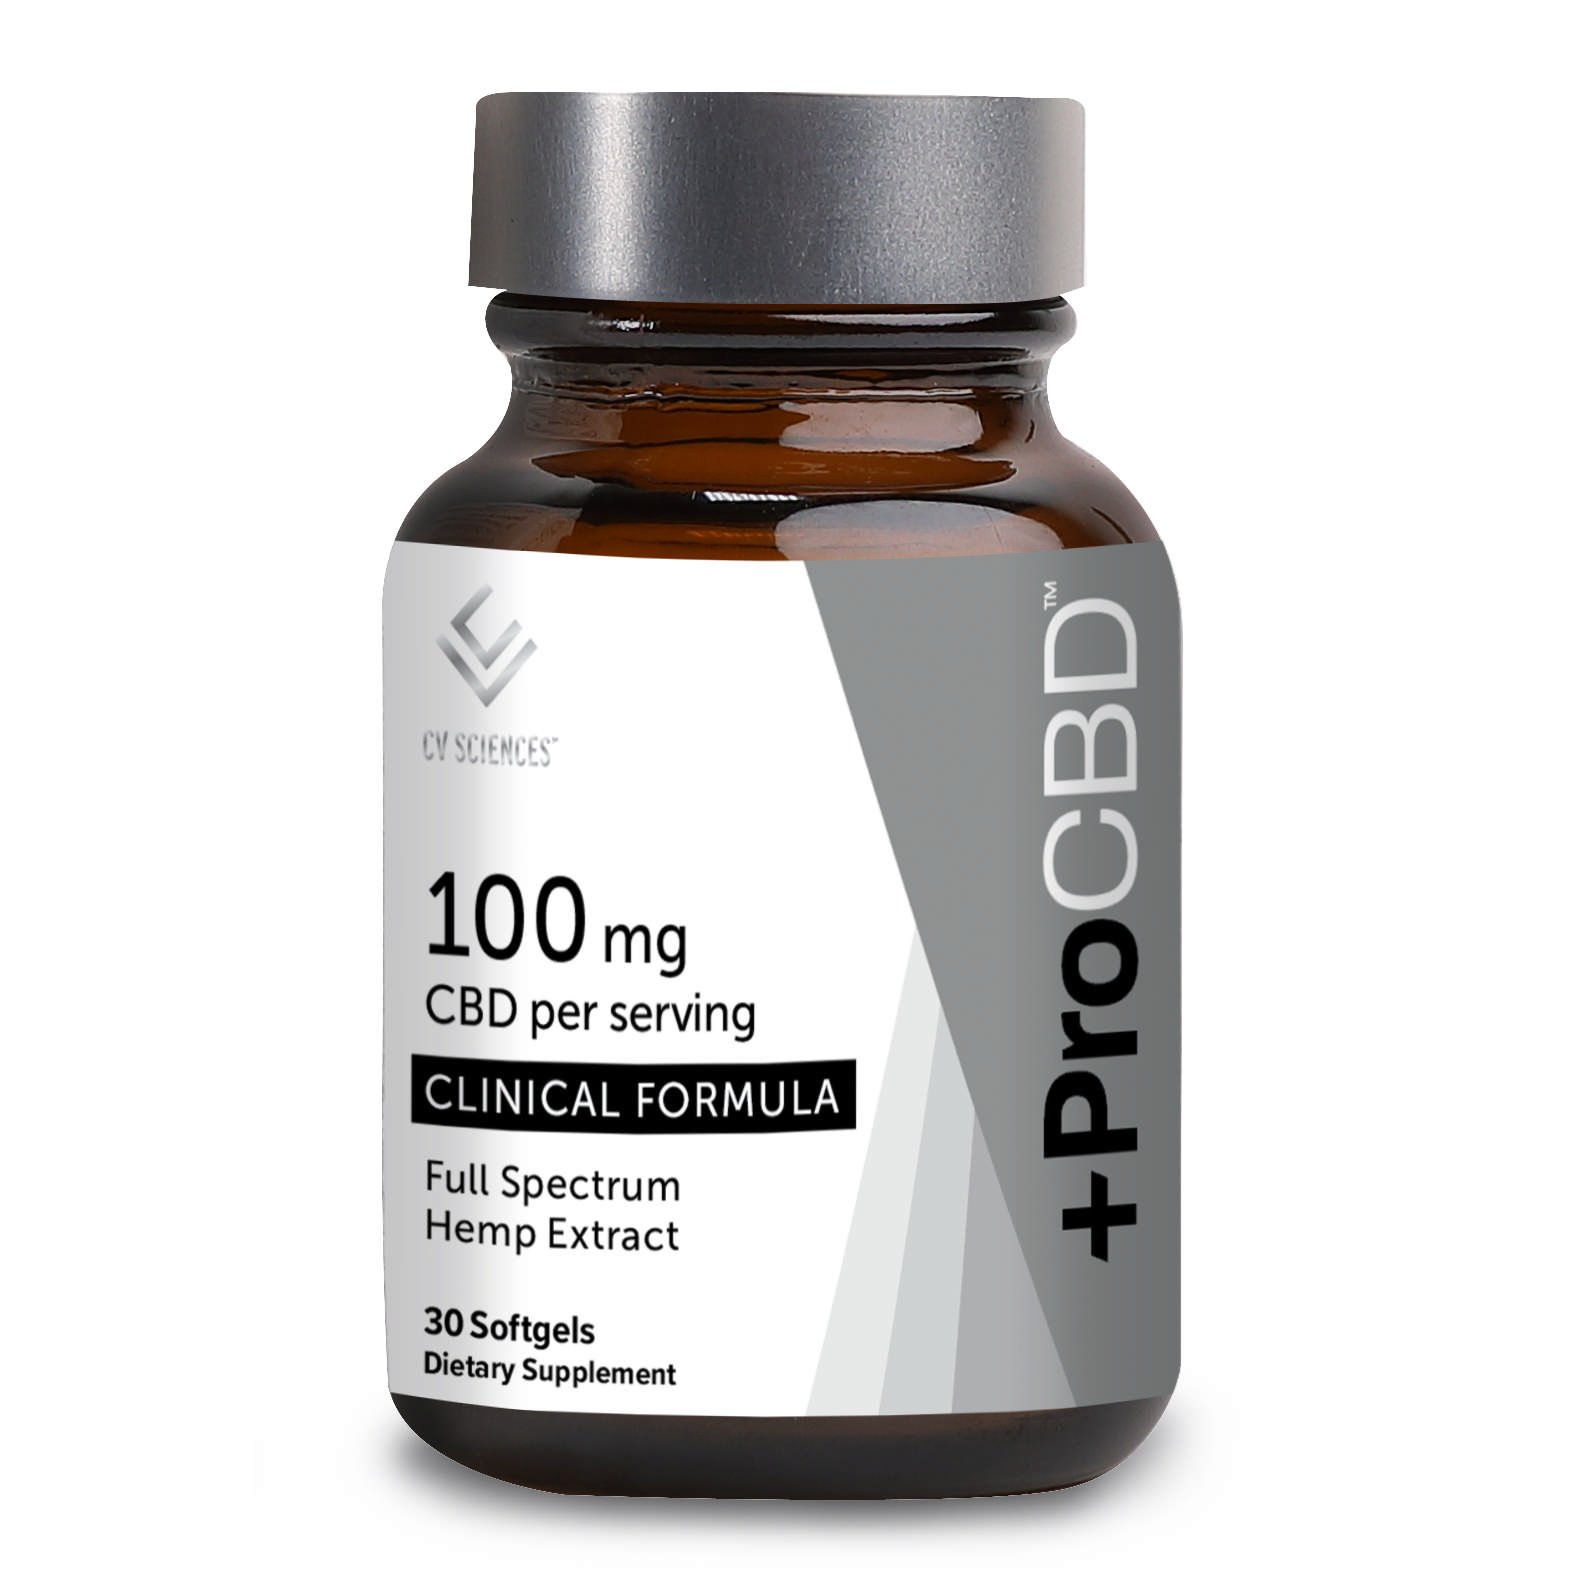 Cv Sciences - Cbd Oil Plus Pro 100 mg softgel